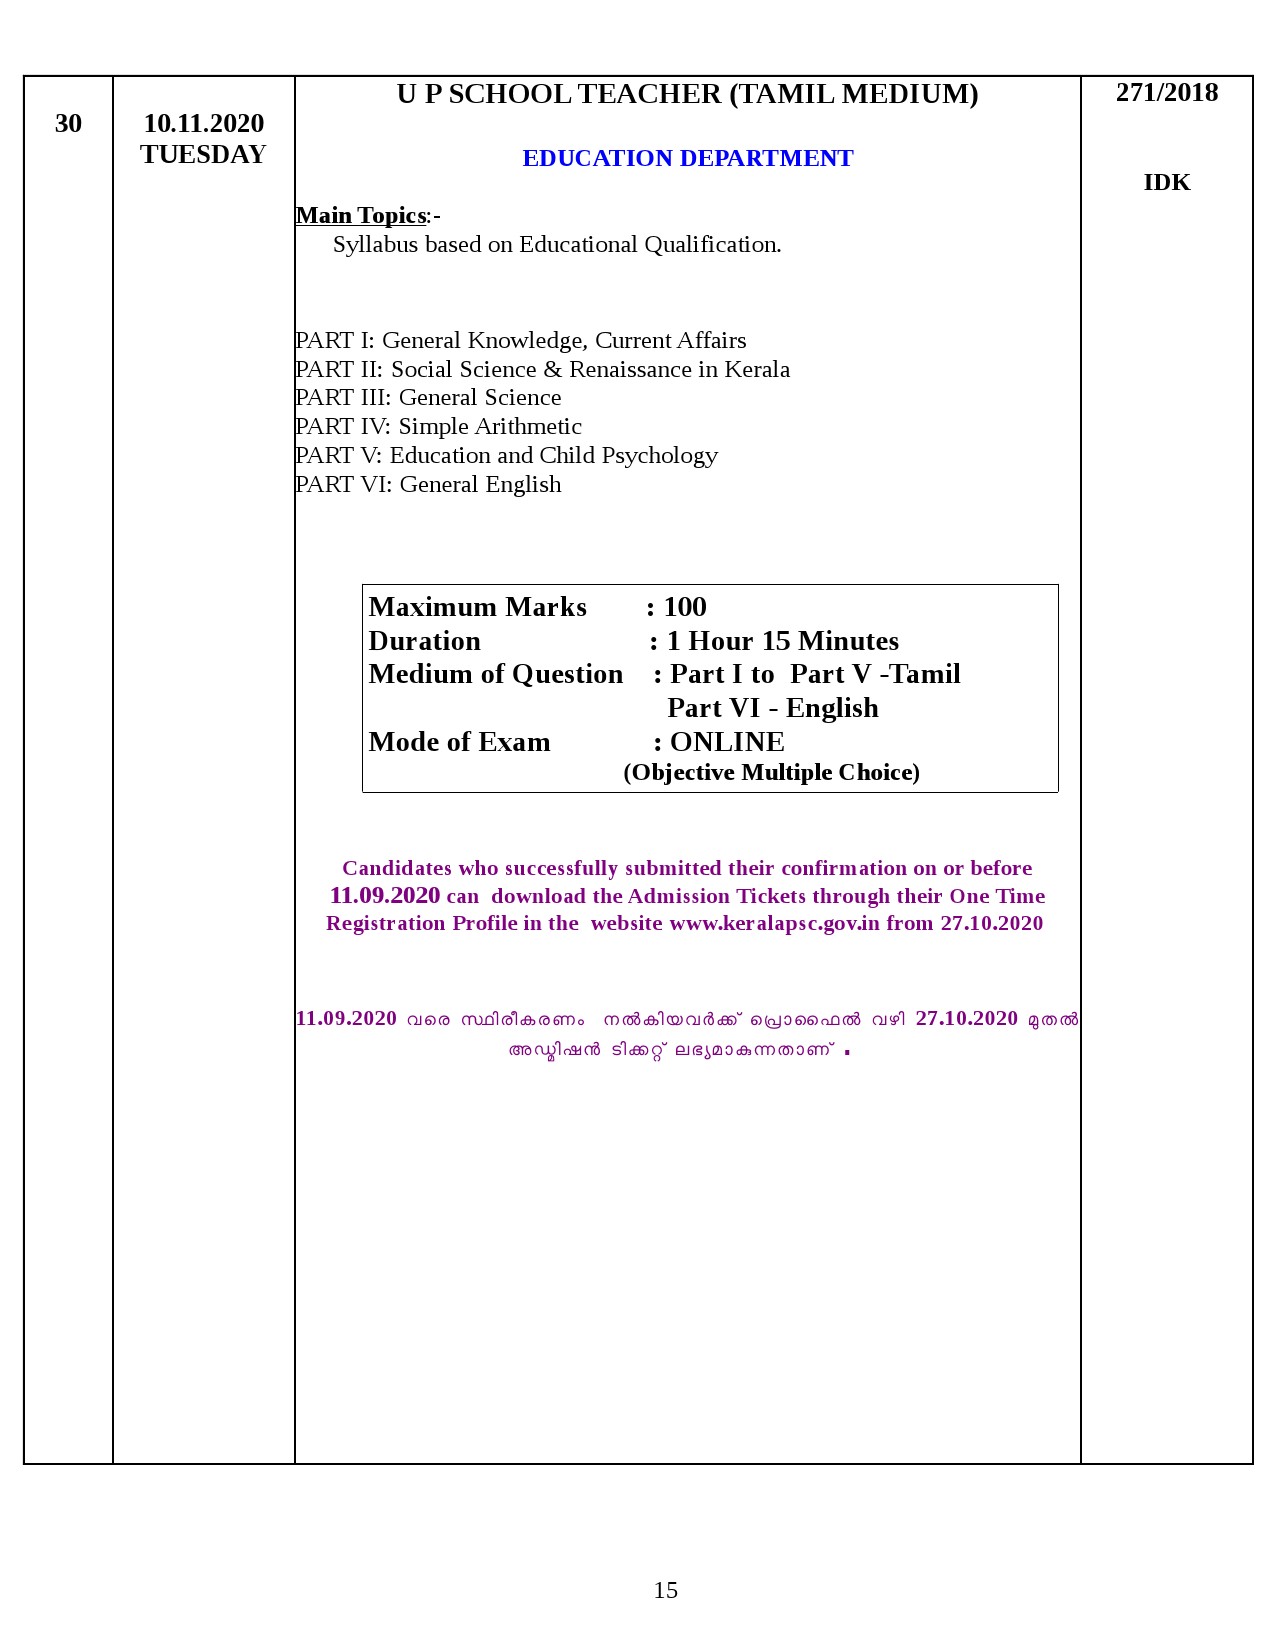 Kerala PSC Final Exam Schedule for November 2020 - Notification Image 15